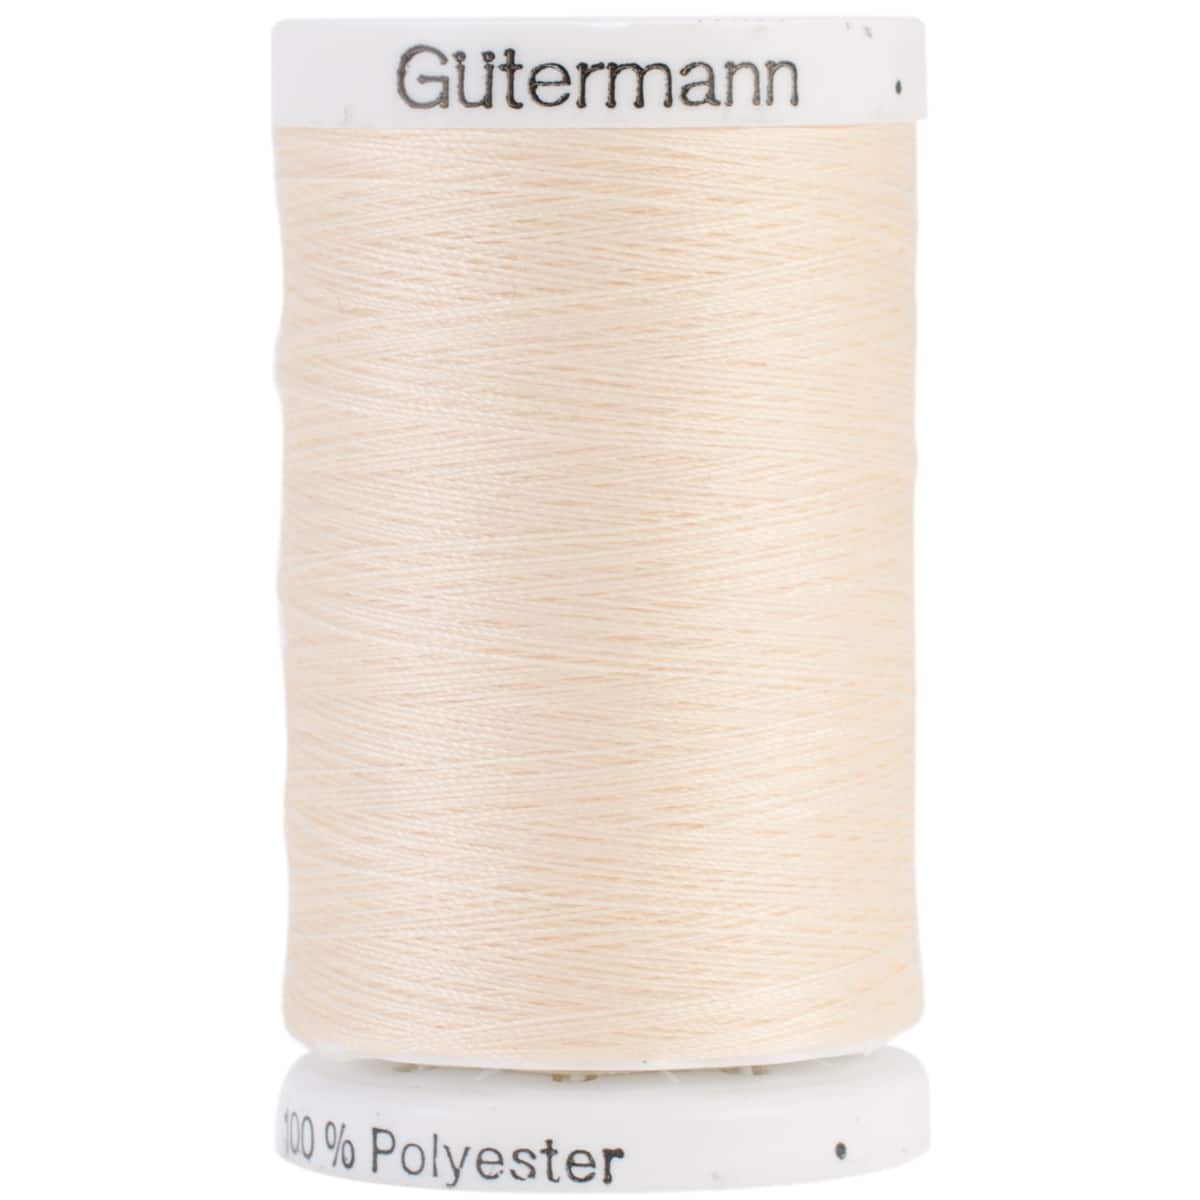 Gutermann Thread Sew-All Polyester Thread 547 Yards - Humboldt